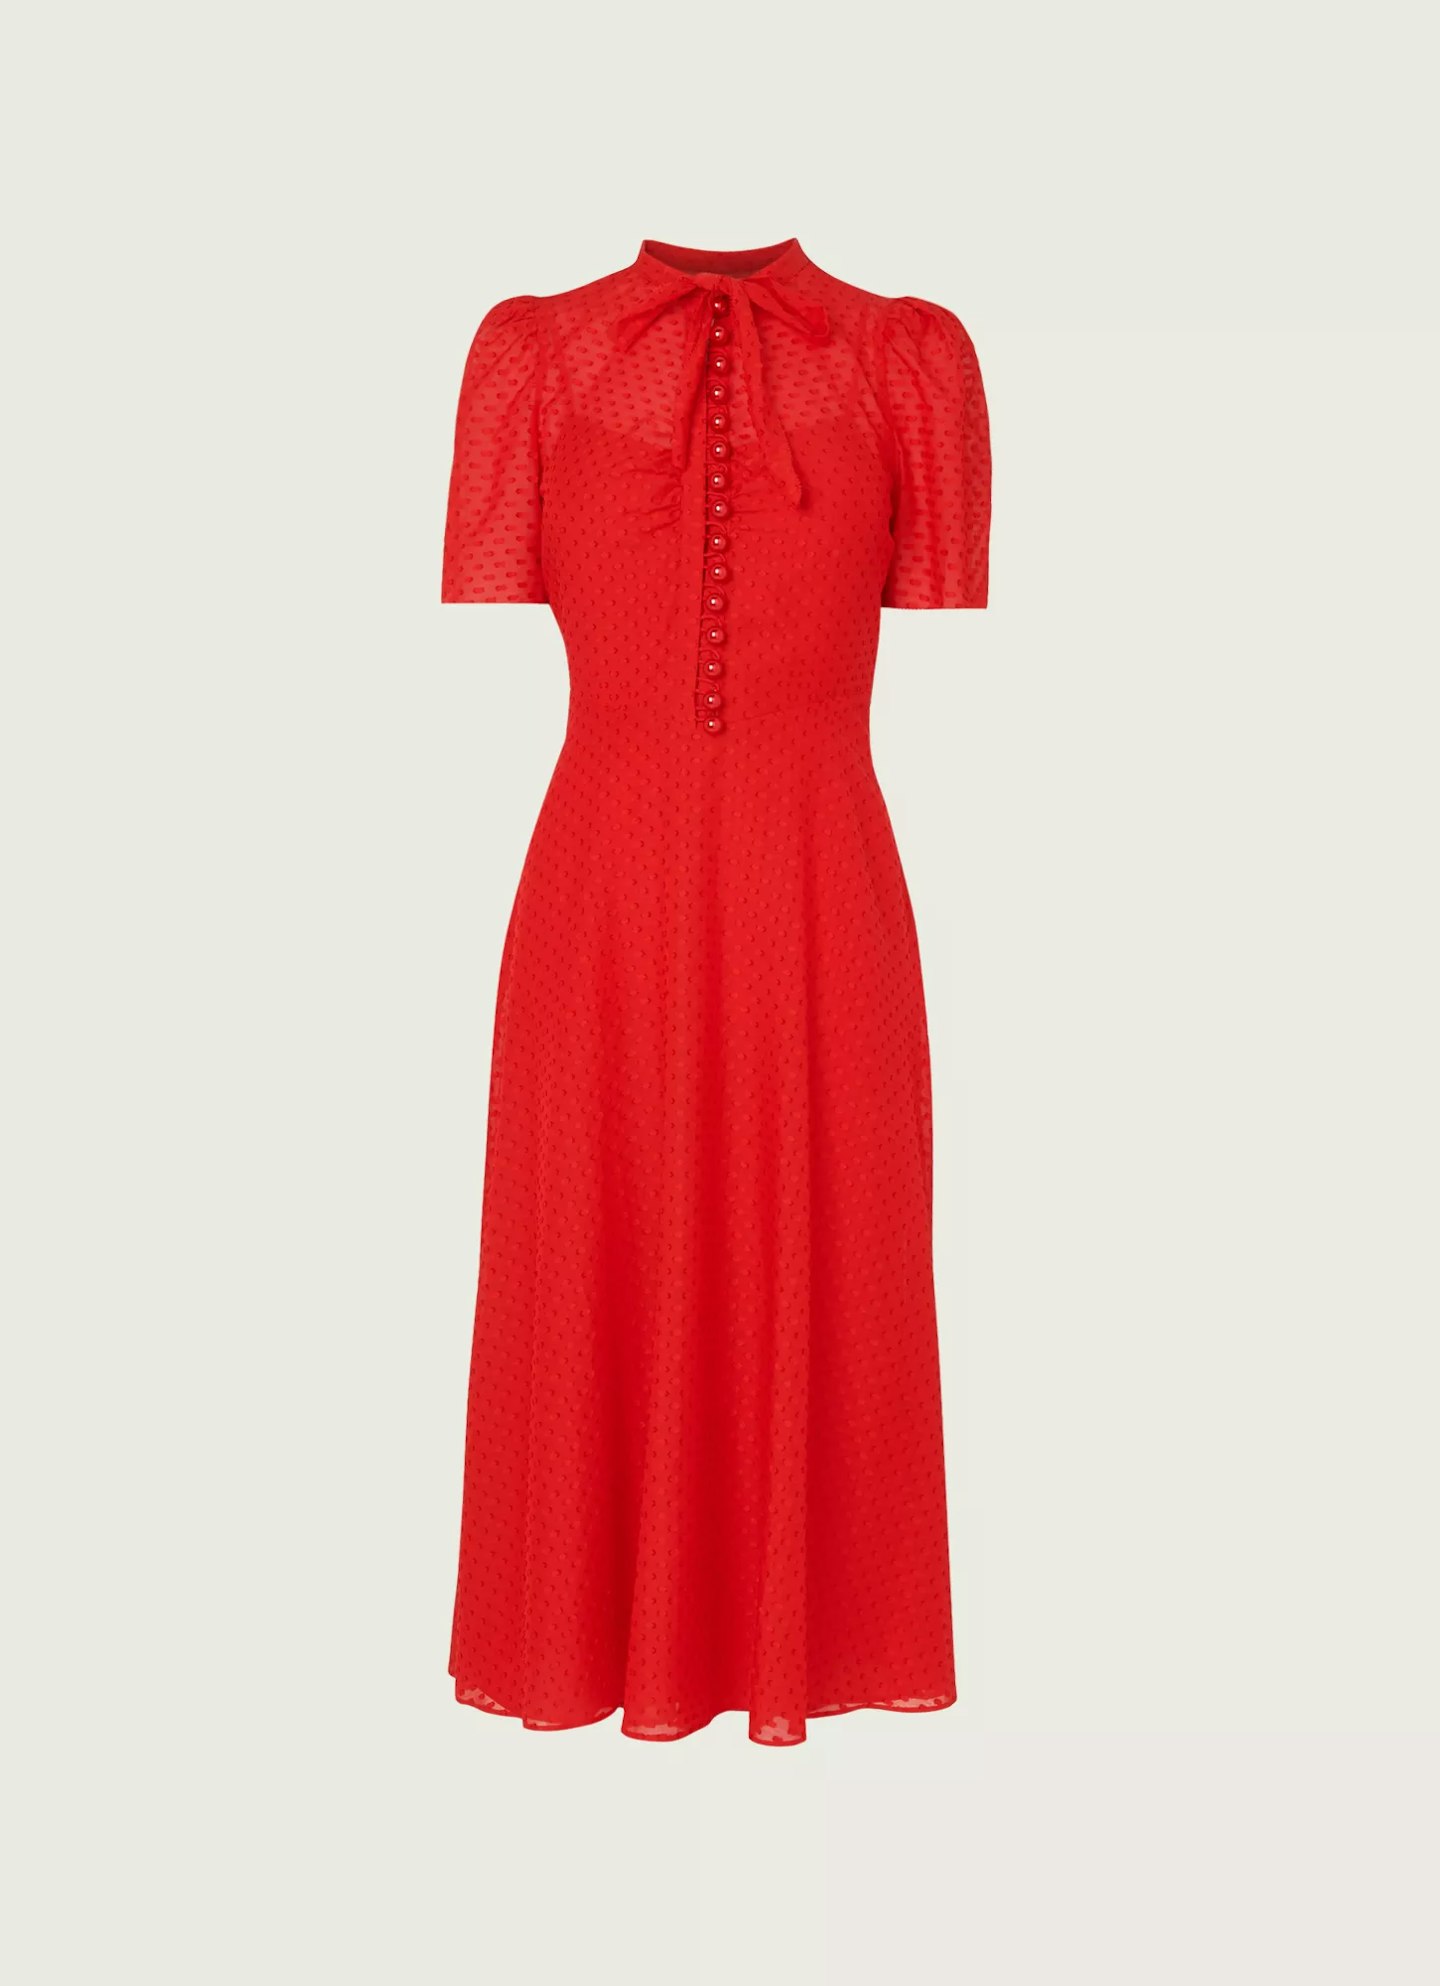 LK Bennett, Sina Red Silk-Cotton Midi Dress, £215